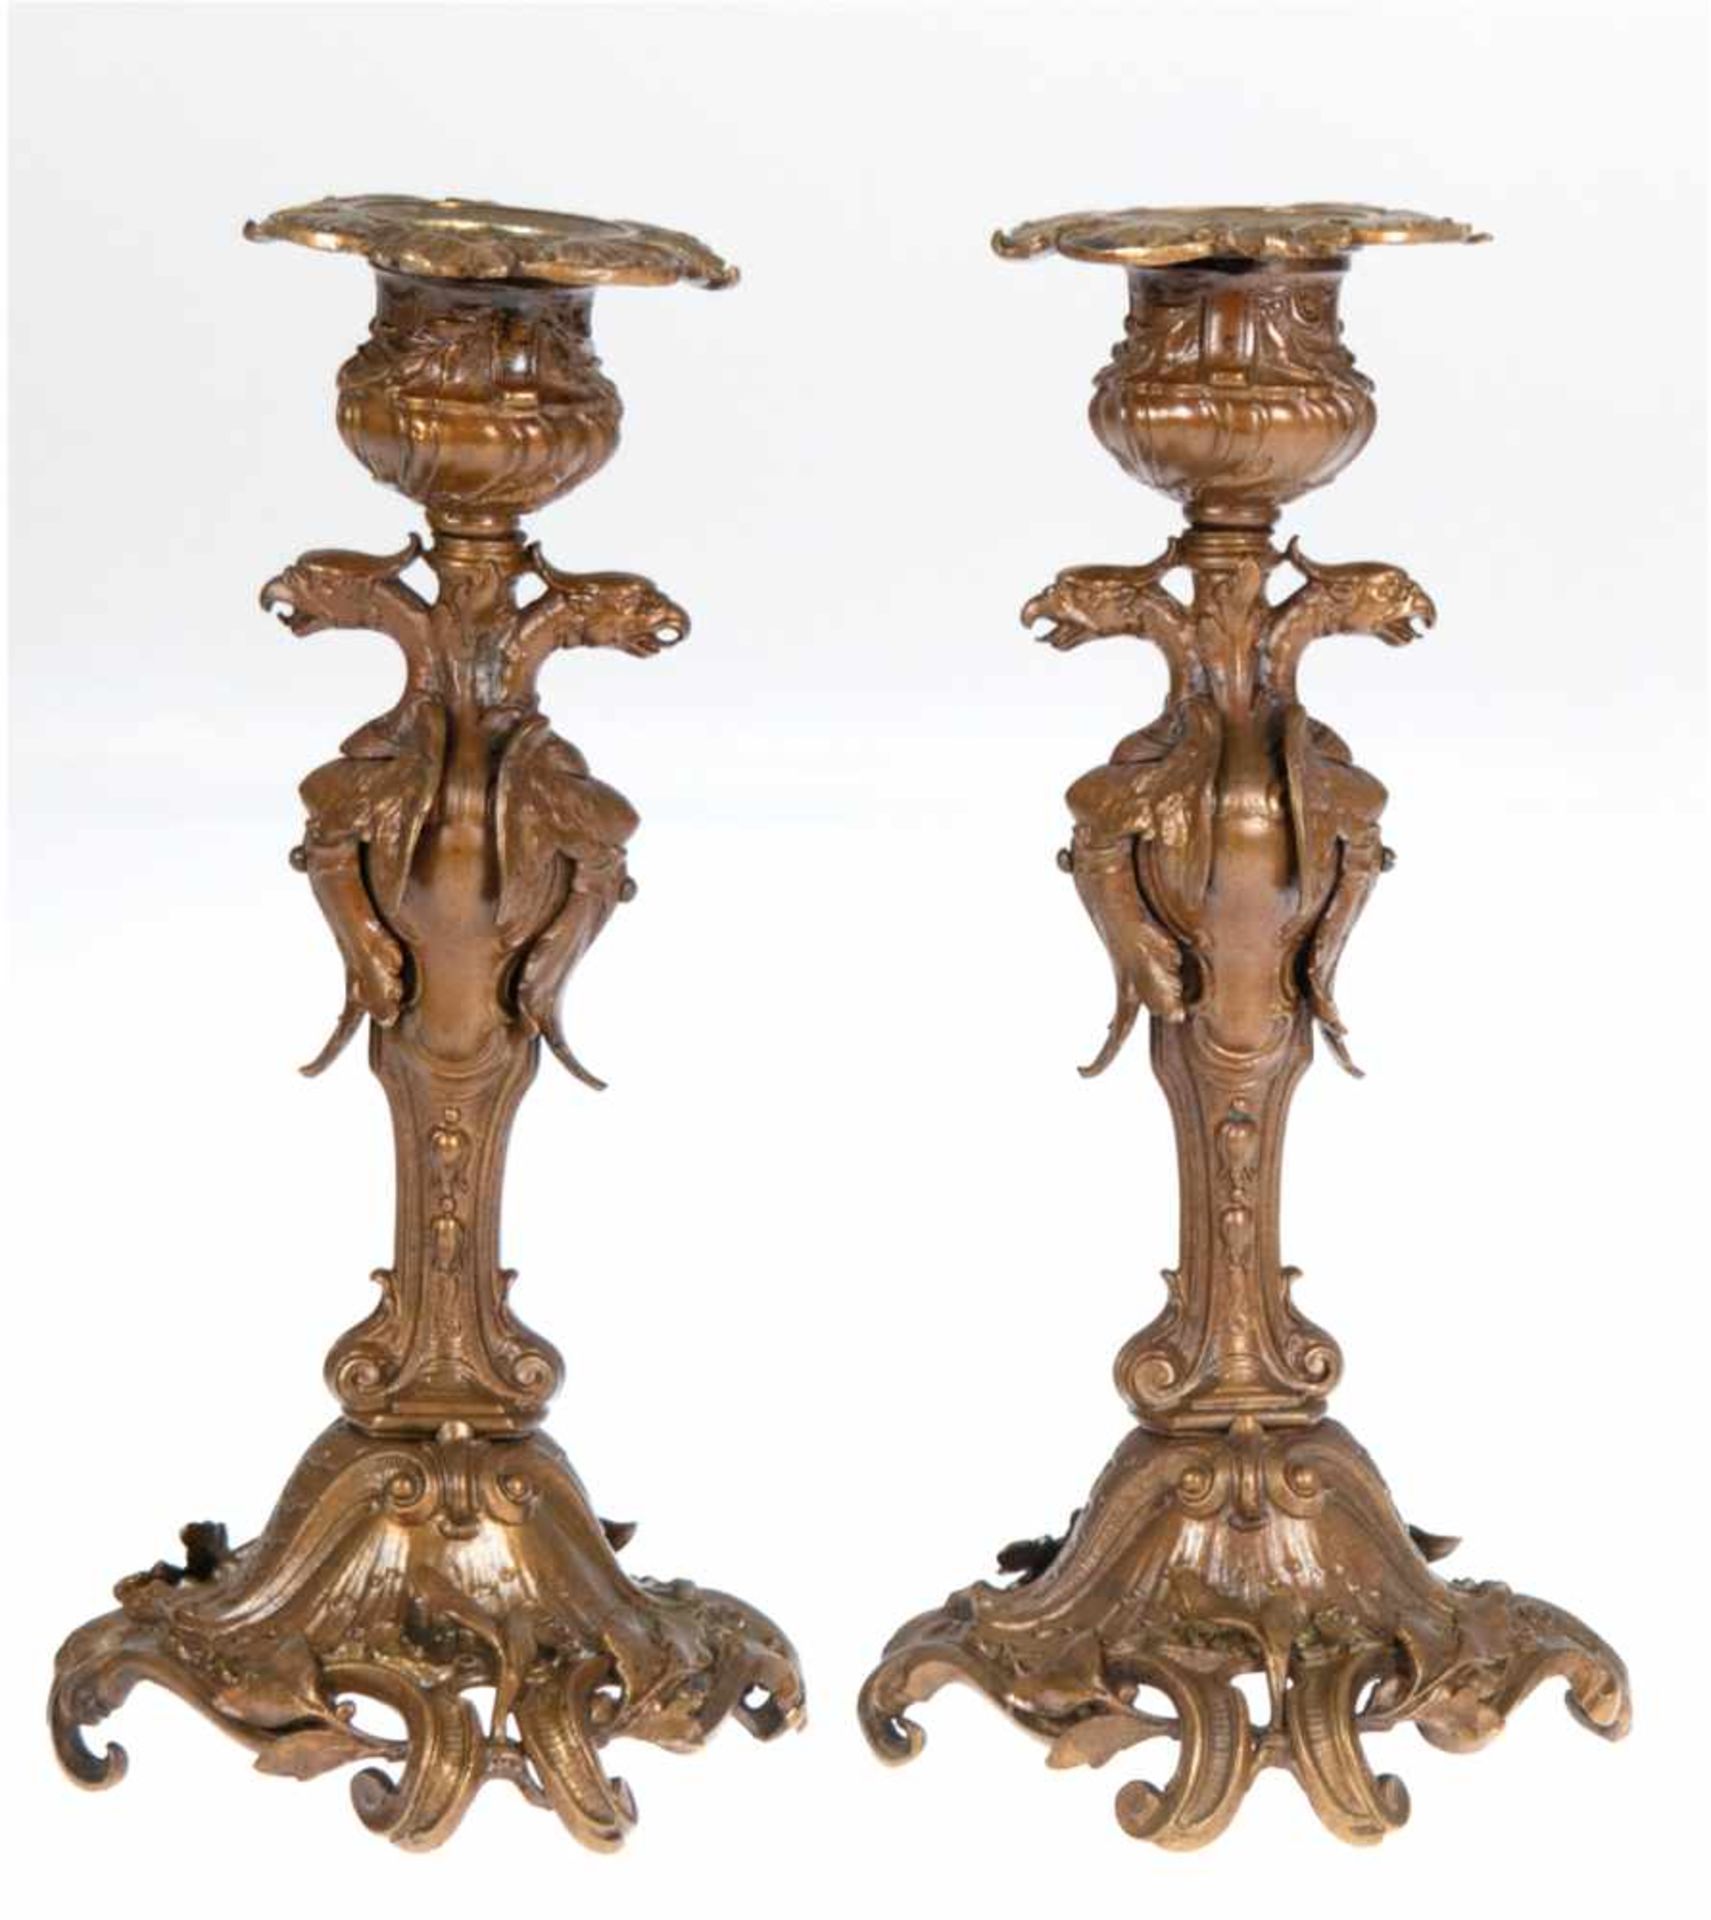 Paar Kerzenleuchter, Ende 19. Jh., Bronze, patiniert, reich reliefiert und verziert,beidseitig Adler